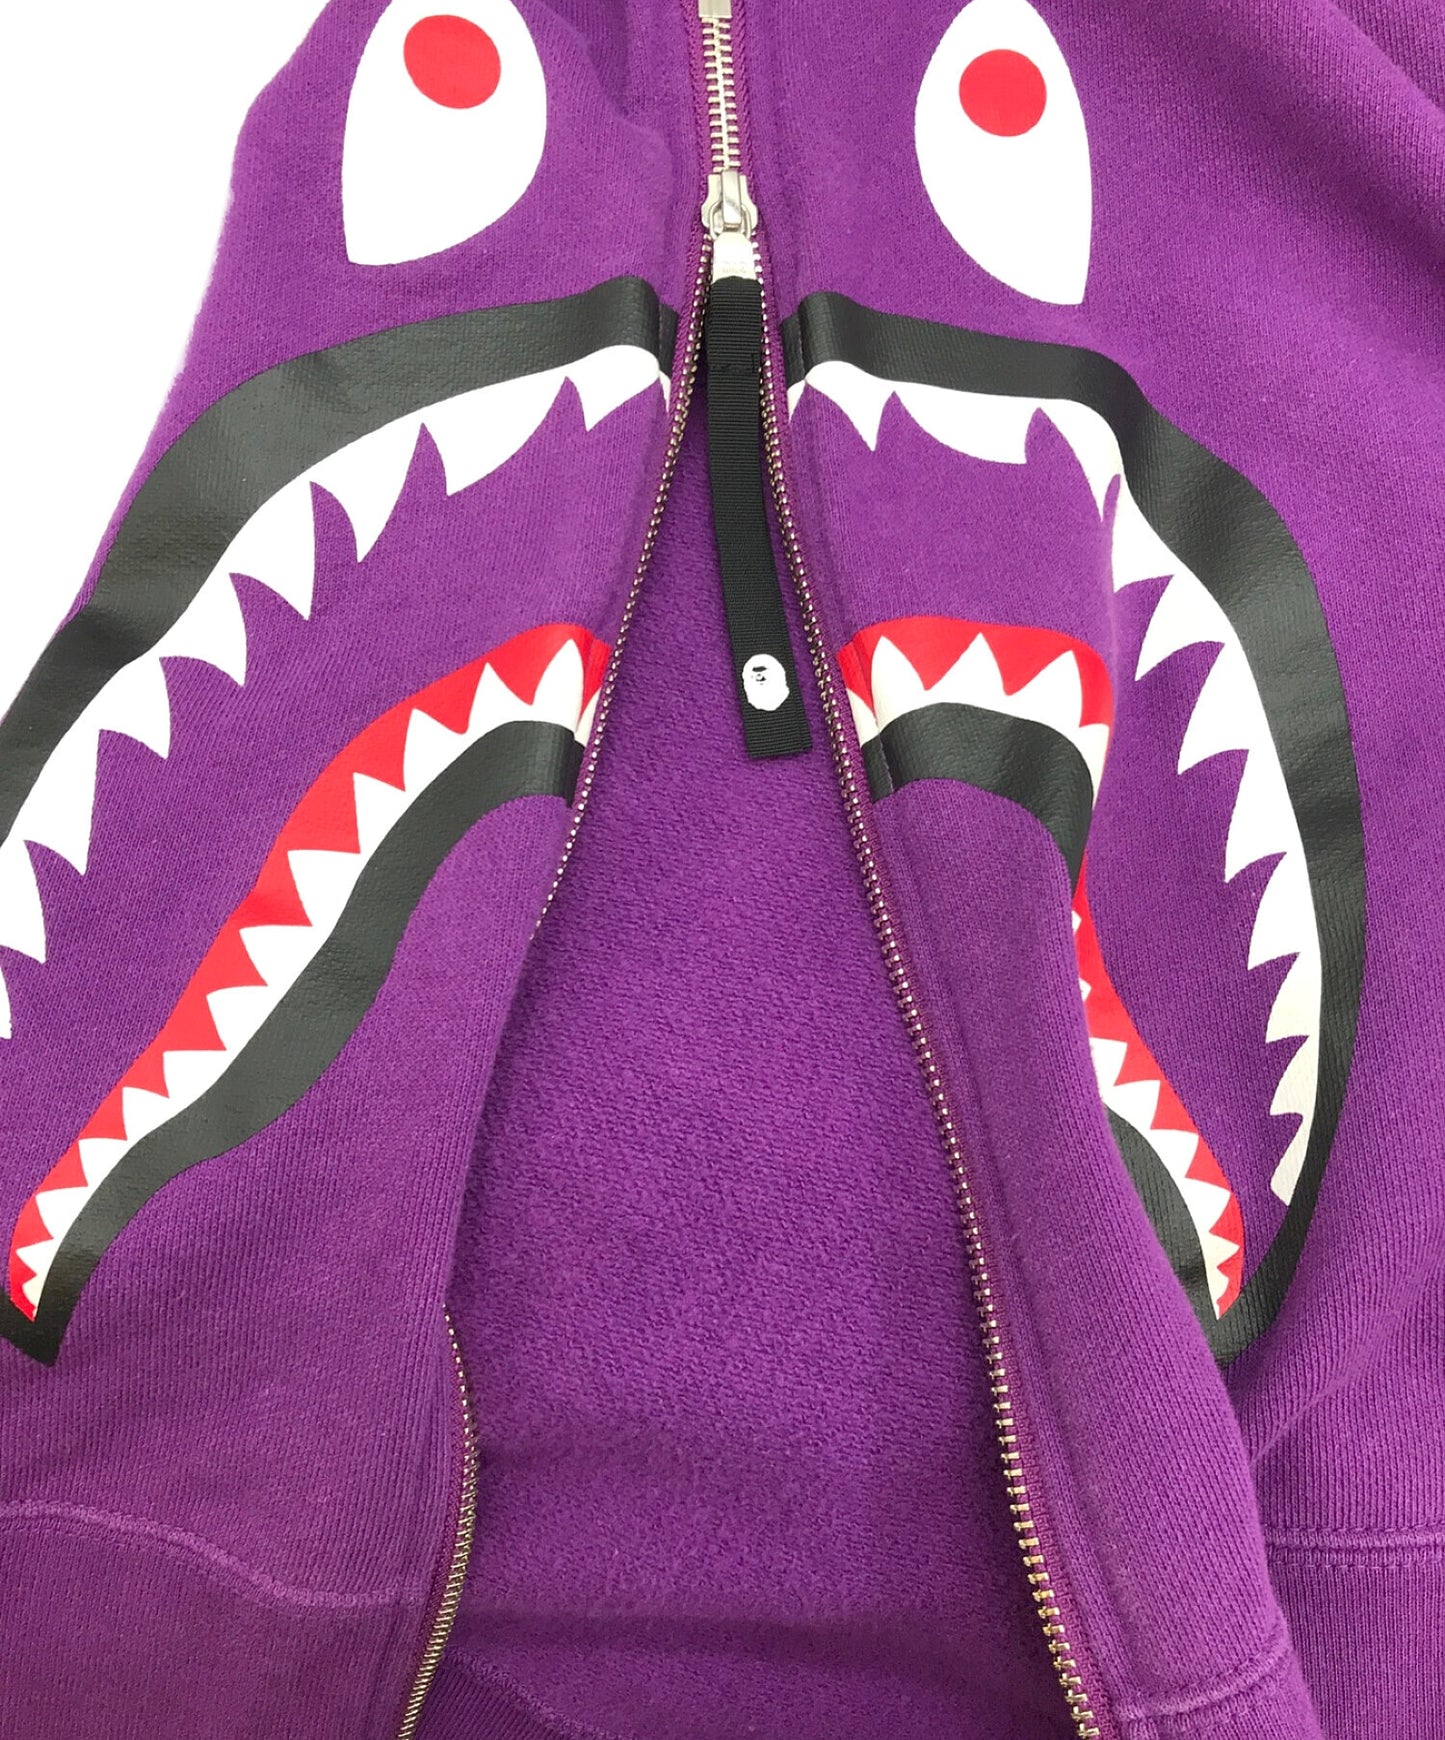 BAPE Side Zip Shark Wide Pullover Hoodie Black/Purple for Women